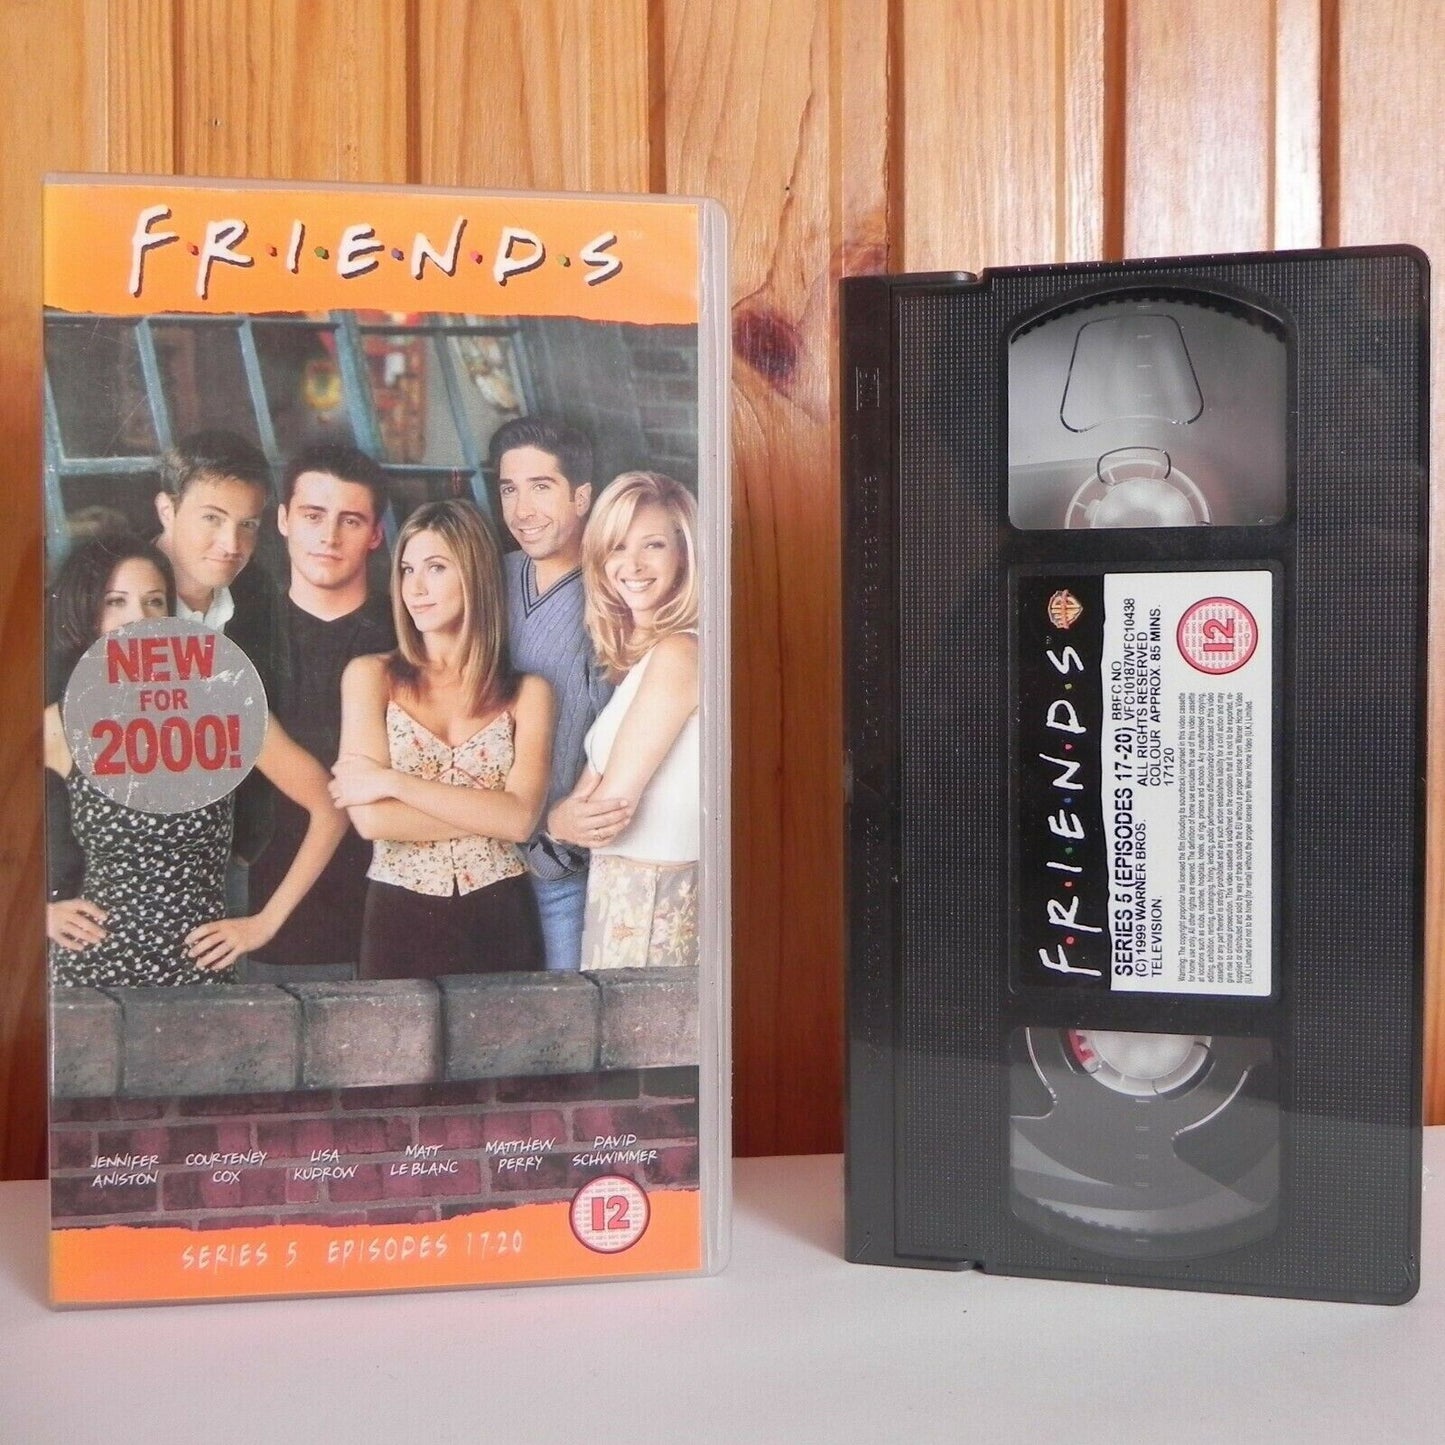 Friends - Warner - Brand New Sealed - TV Show - Series 5 - Episodes 17-20 - VHS-